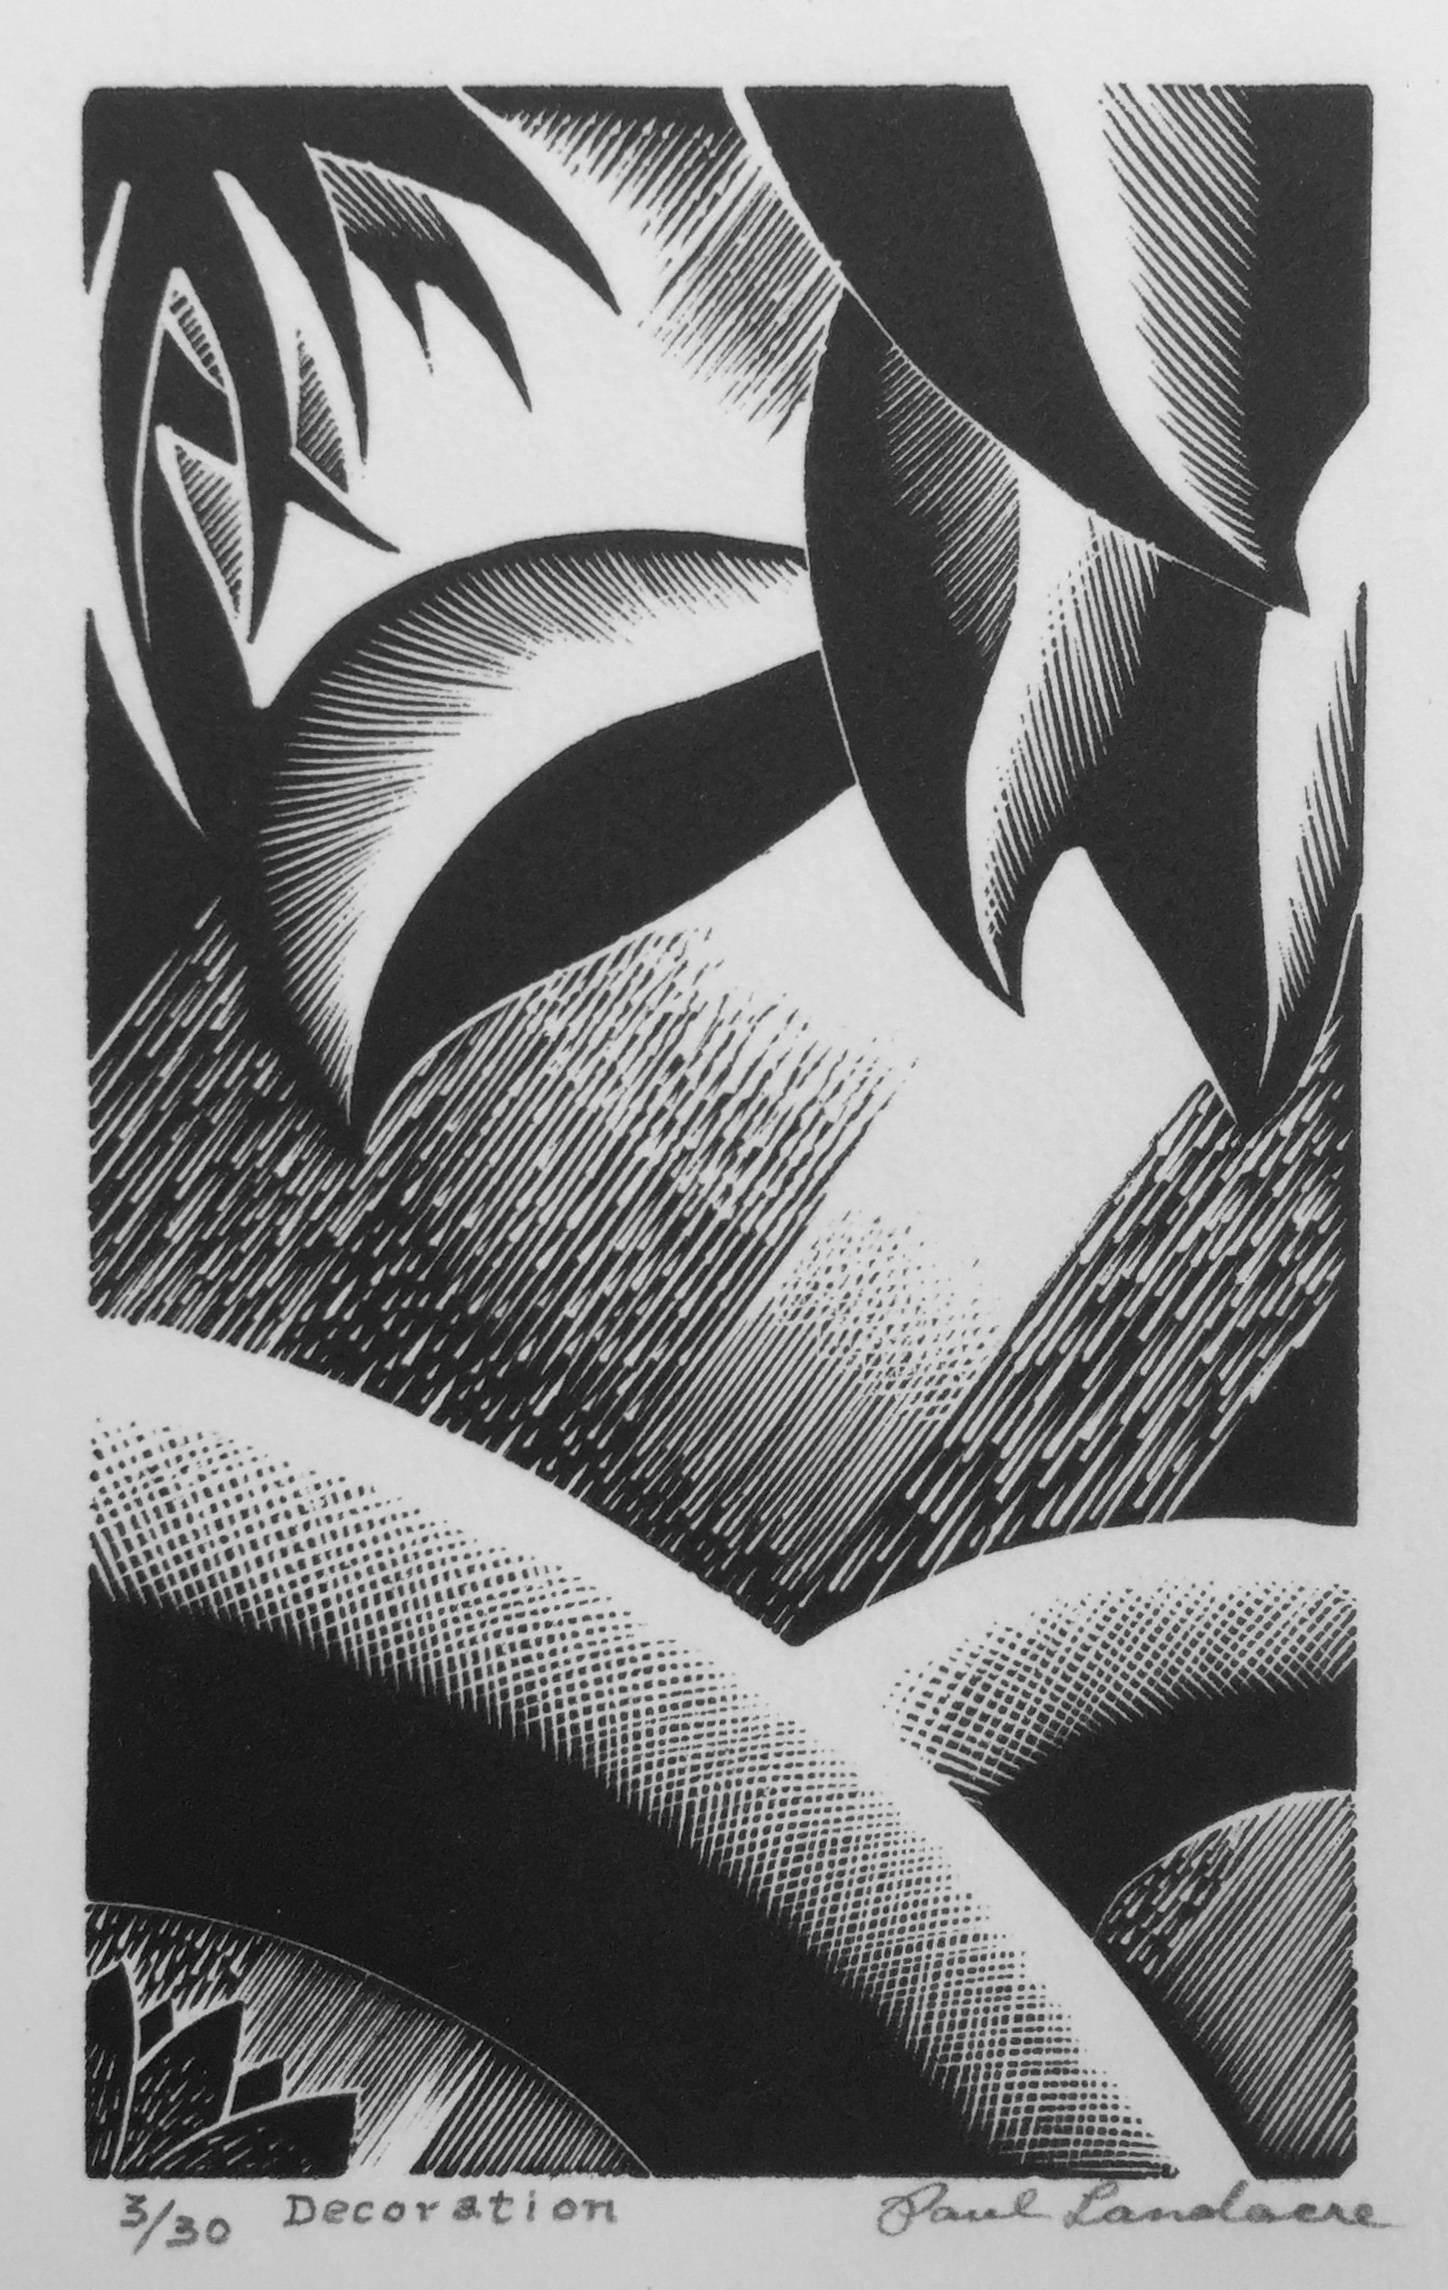 Paul Landacre Abstract Print – DEkorATION SCHmuck